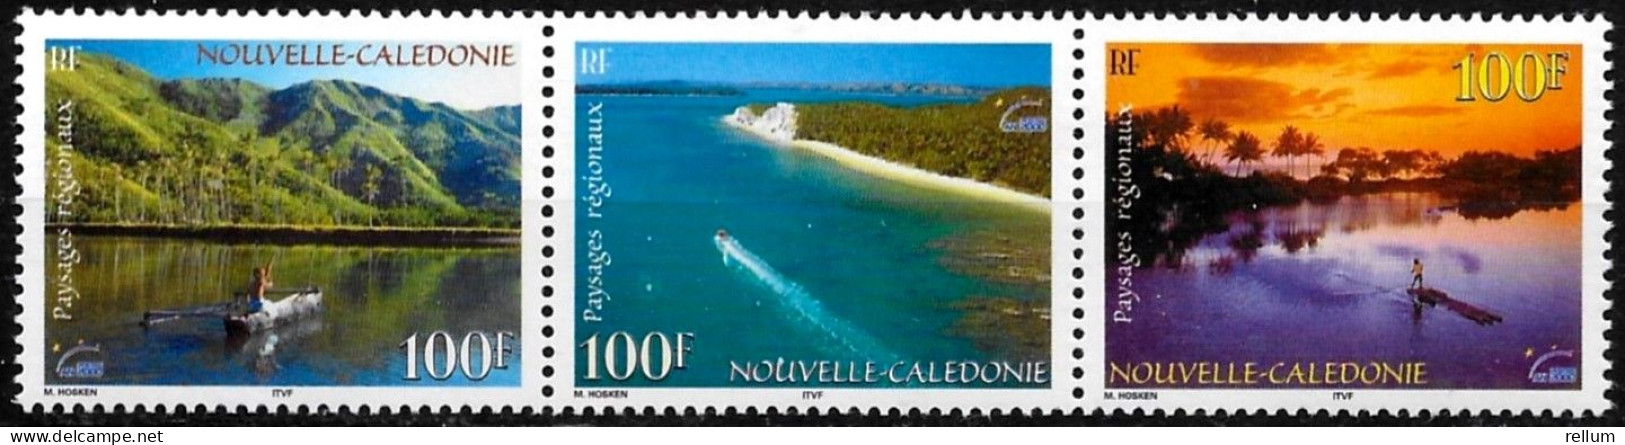 Nouvelle Calédonie 2000 - Yvert Et Tellier Nr. 827/829 Se Tenant - Michel Nr. 1219/1221 Zusammenhängend  ** - Neufs